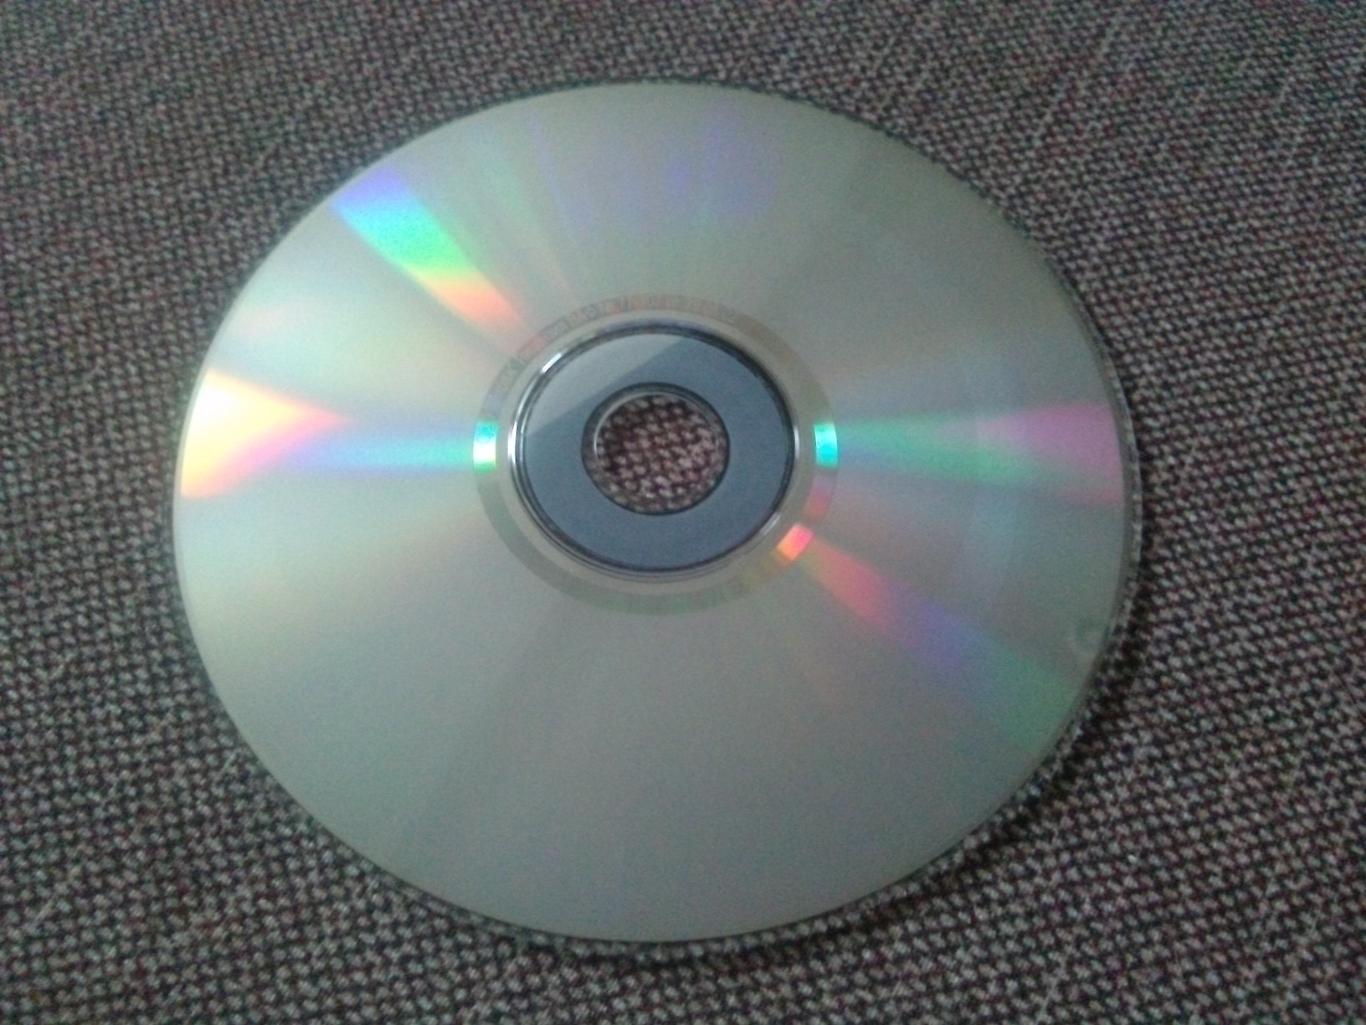 MP - 3 CD диск : группаBiohazard1990 - 2005 гг. 10 альбомов Thrash metal 3